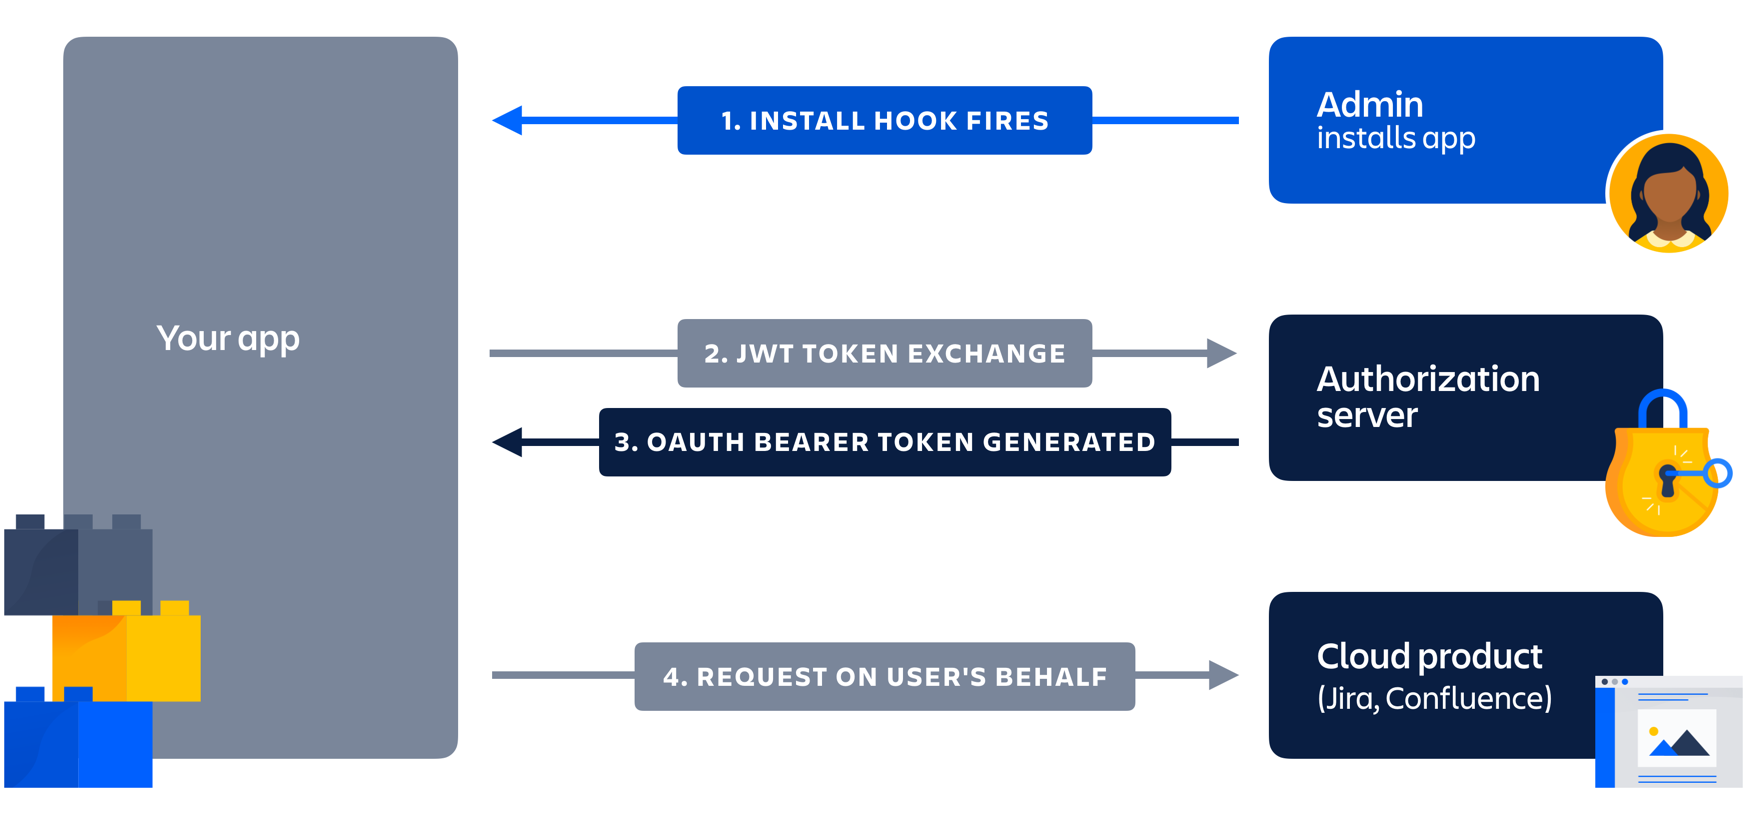 OAuth  - JWT bearer token authorization grant type